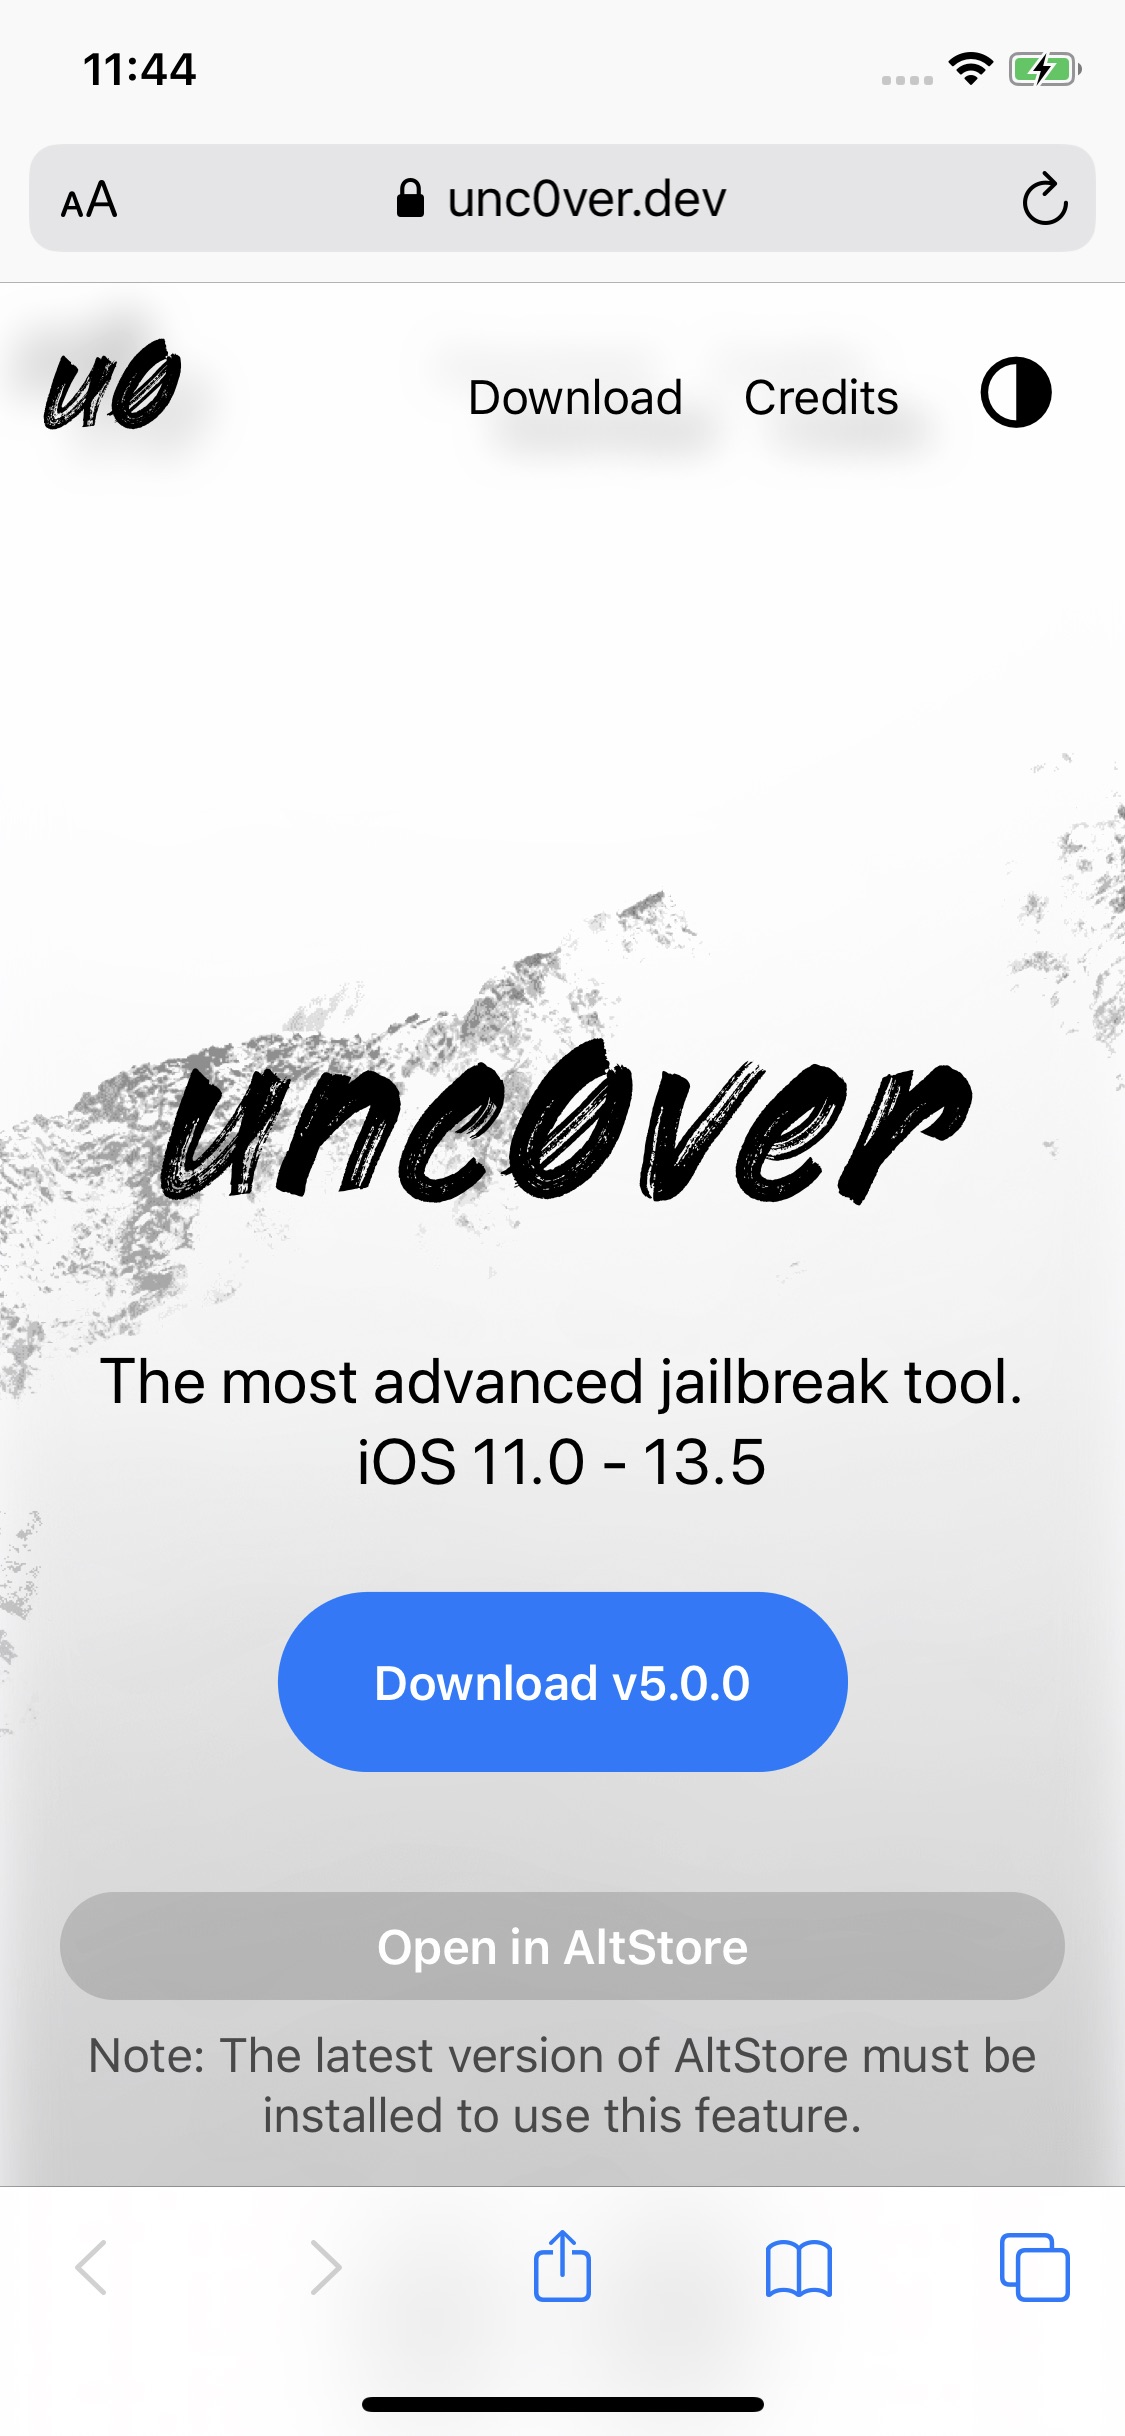 How to Jailbreak Your iPhone on iOS 13.5 Using Unc0ver (Windows)